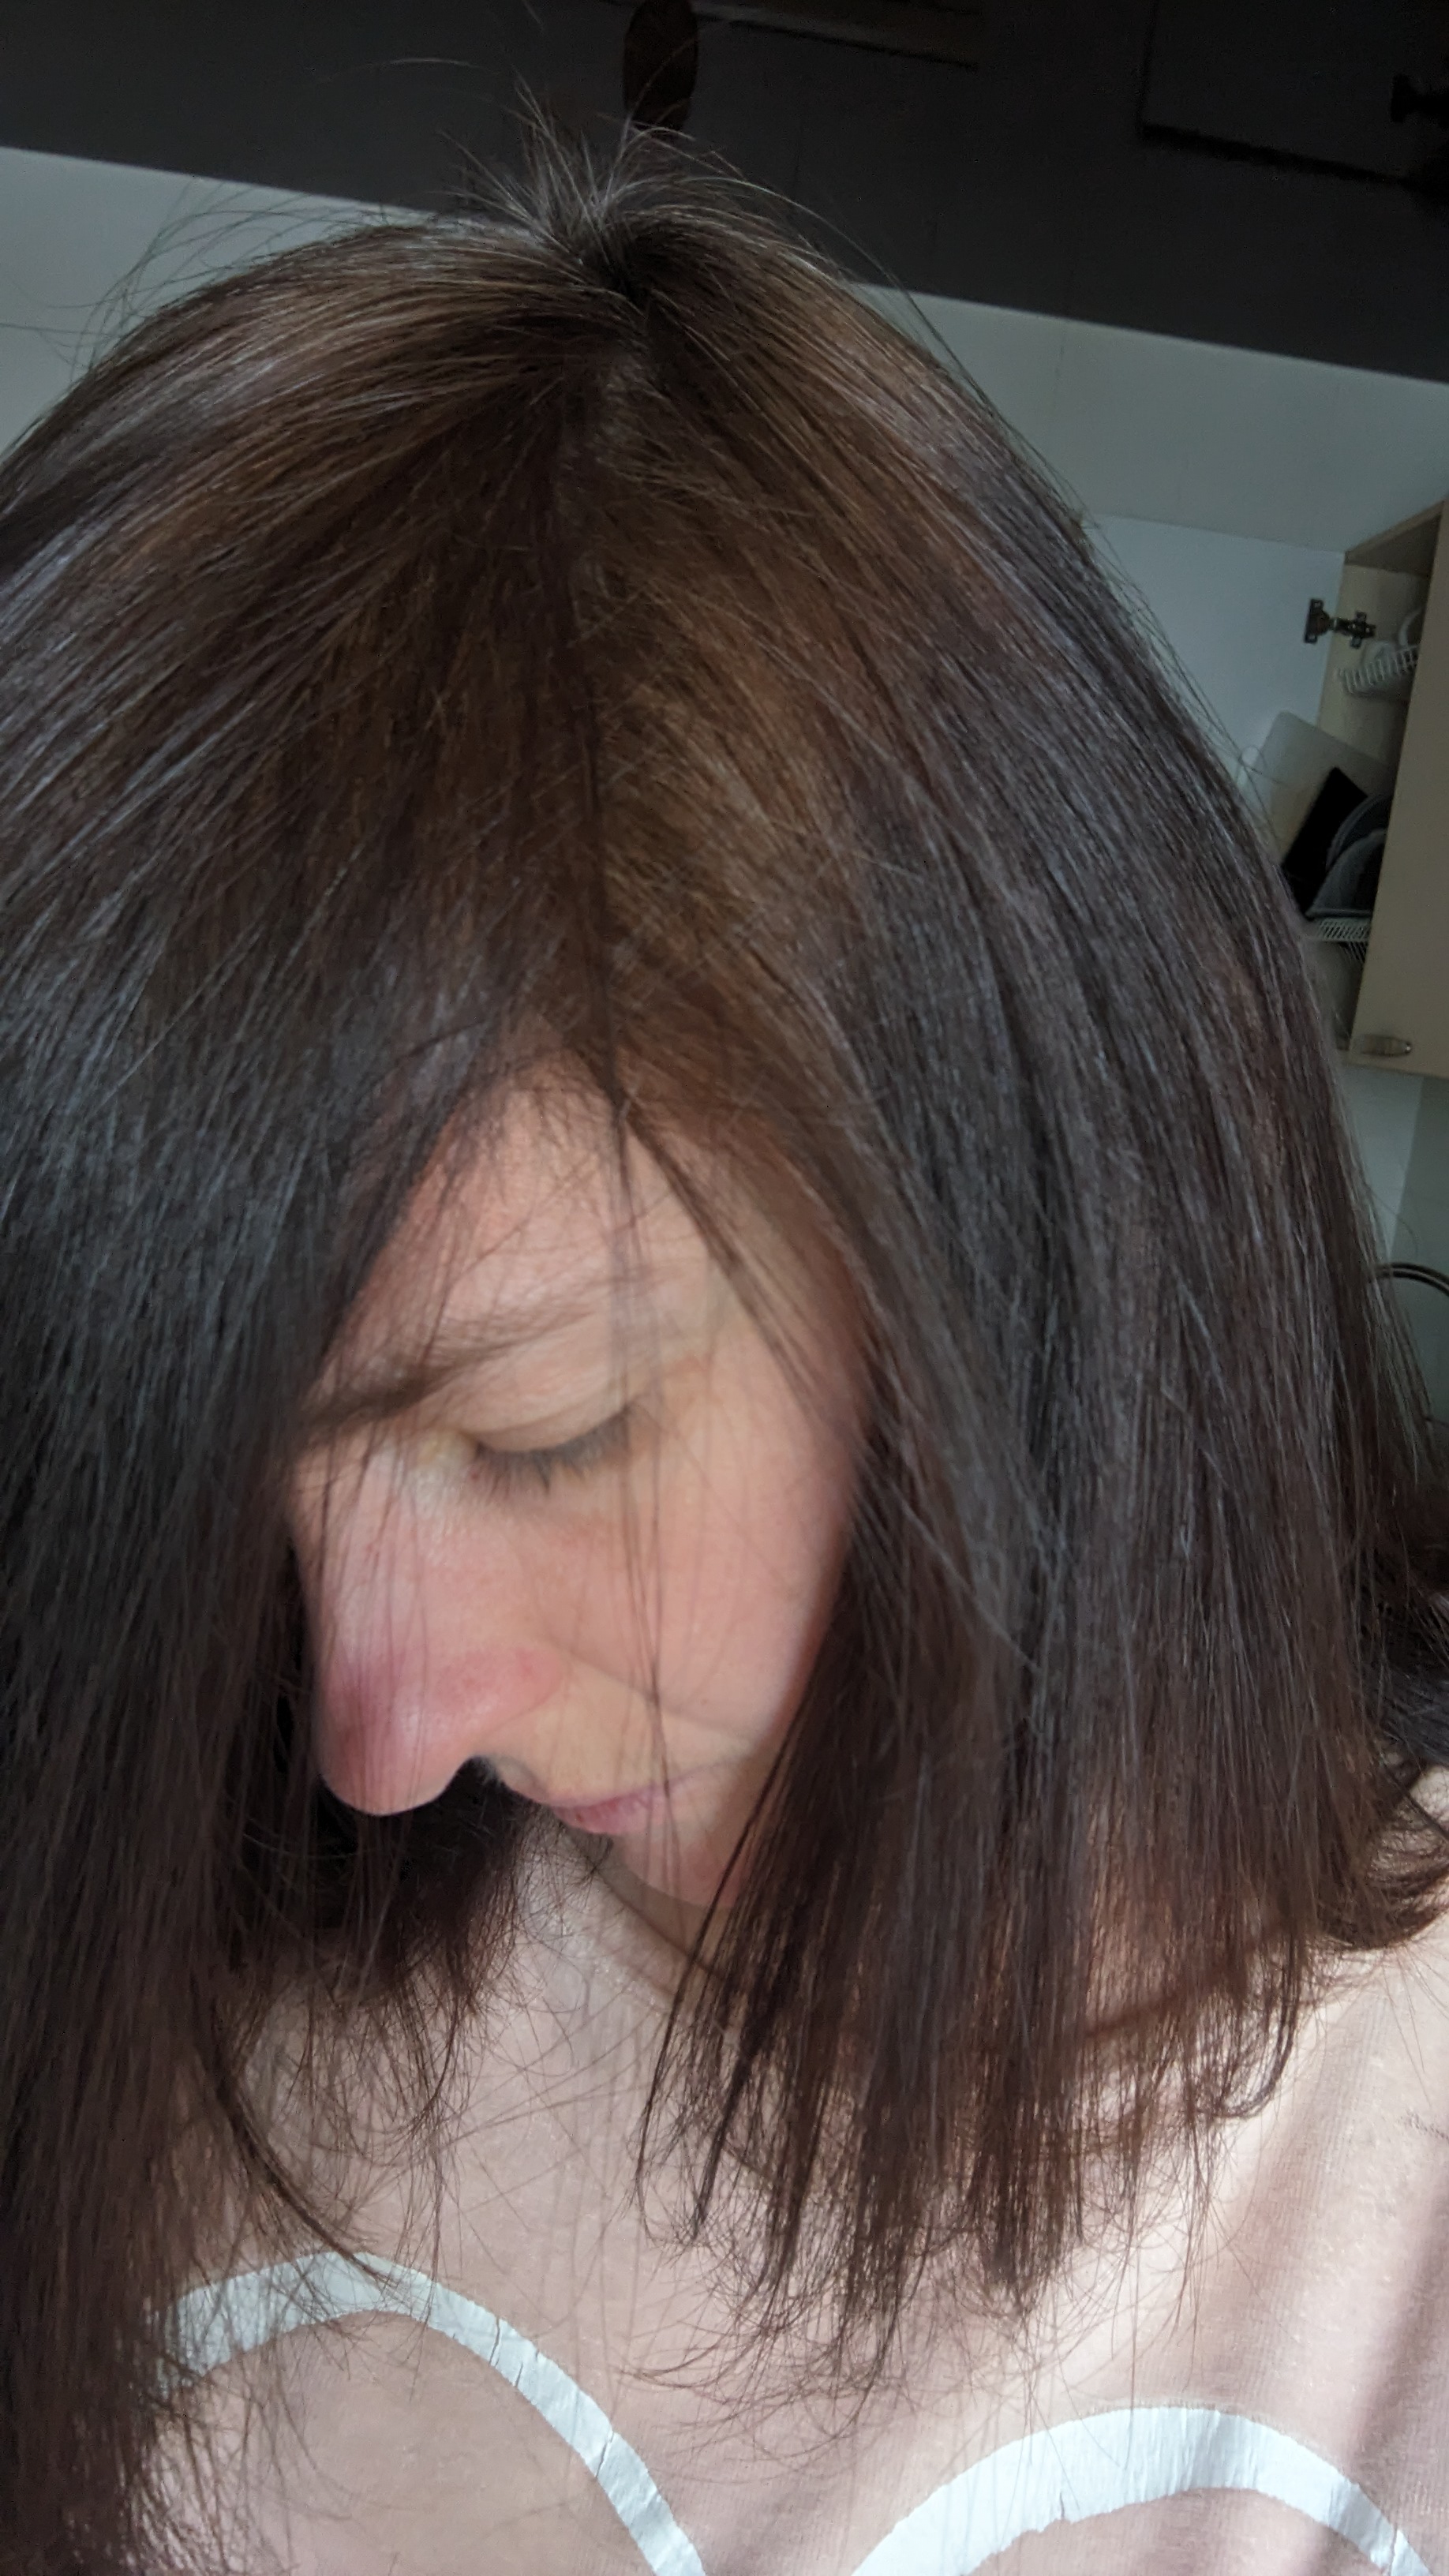 Фарба для волосся польського виробника Joanna Hair